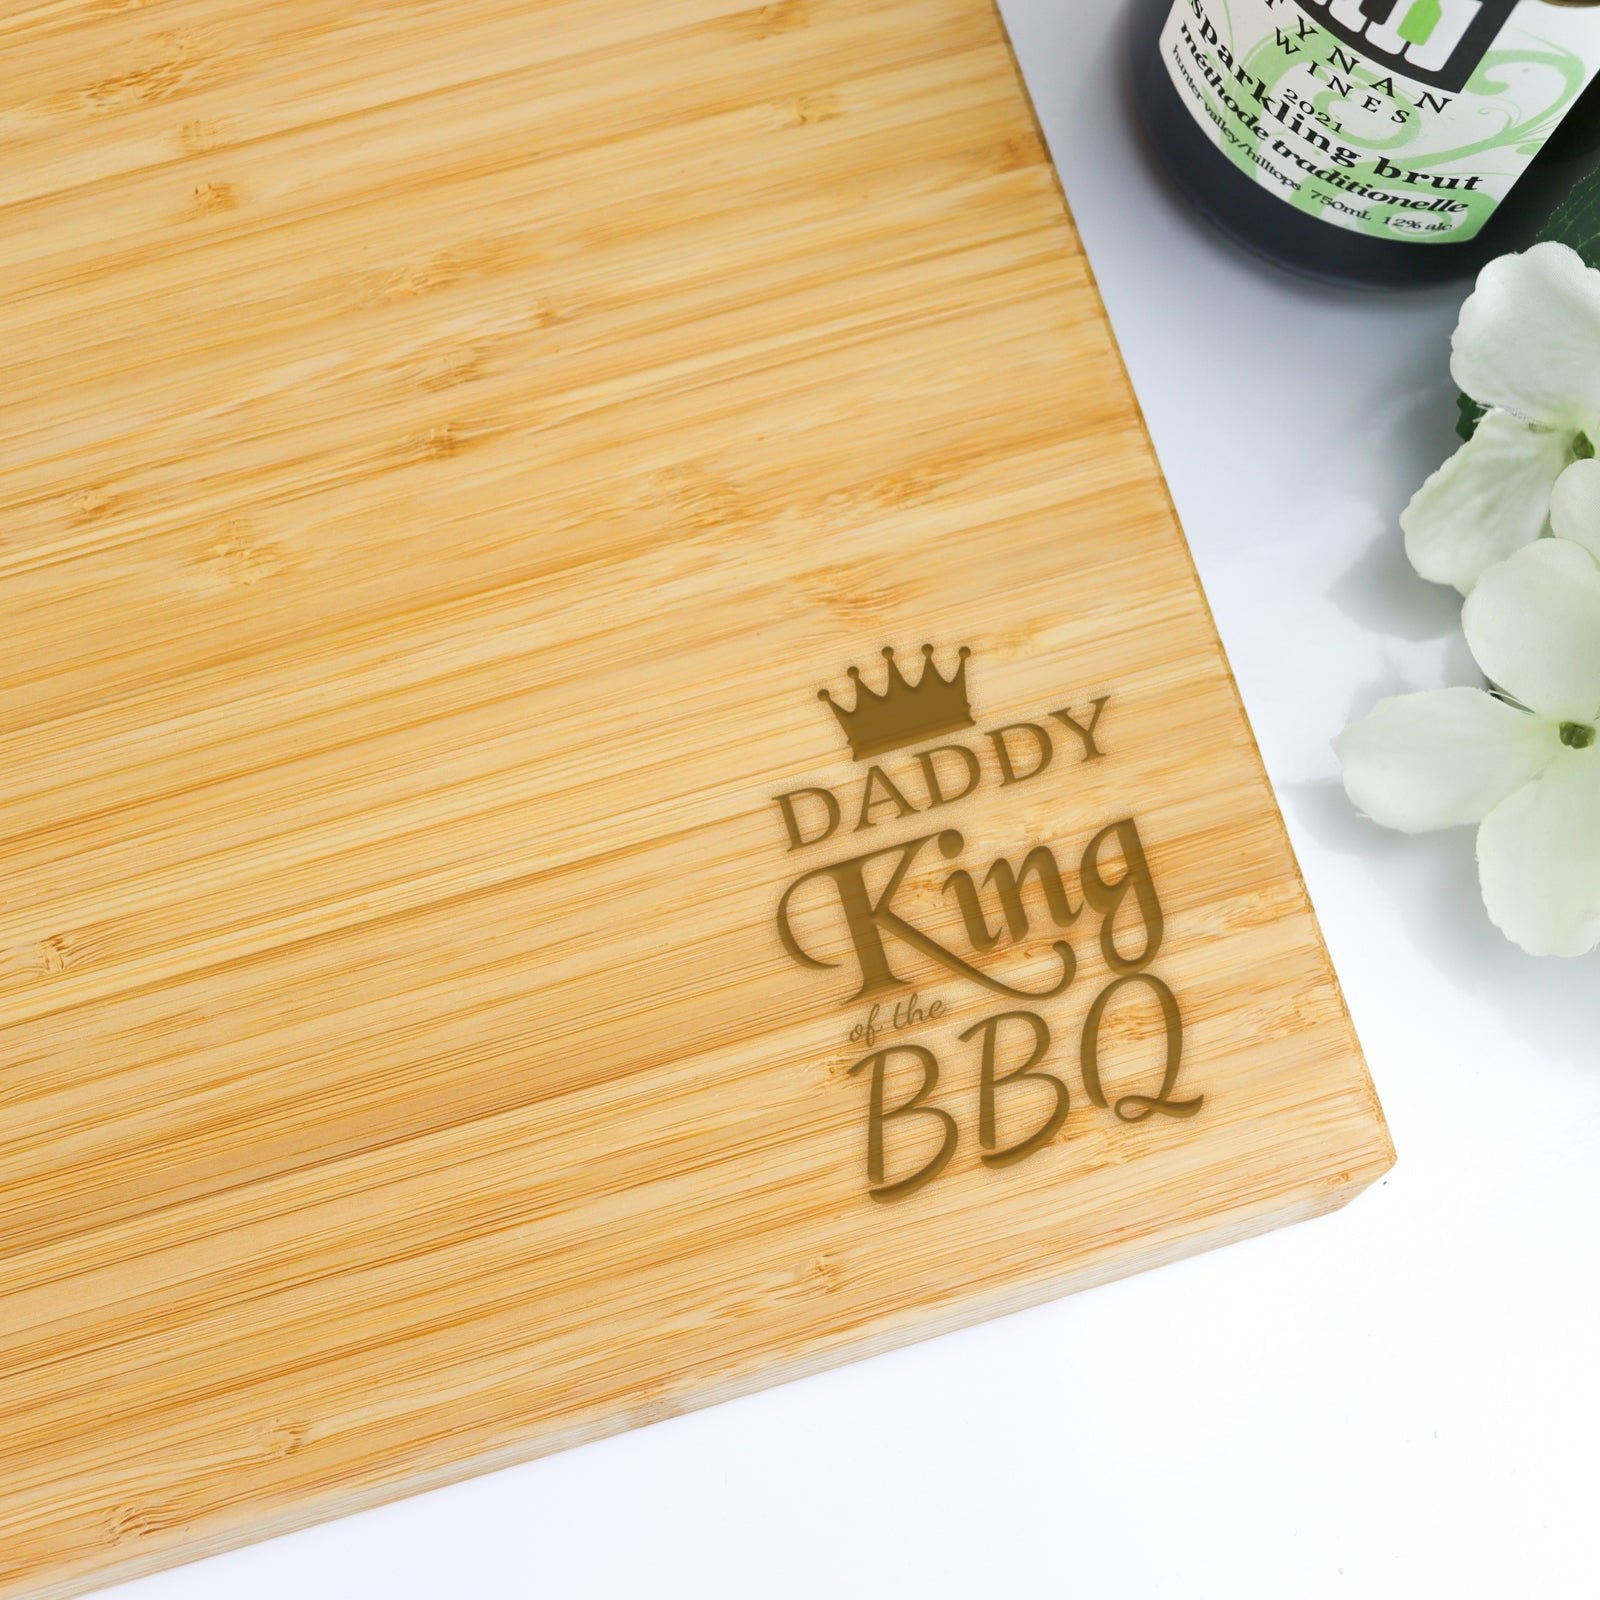 BBQ King Engraved Chopping Board - CustomKings - 